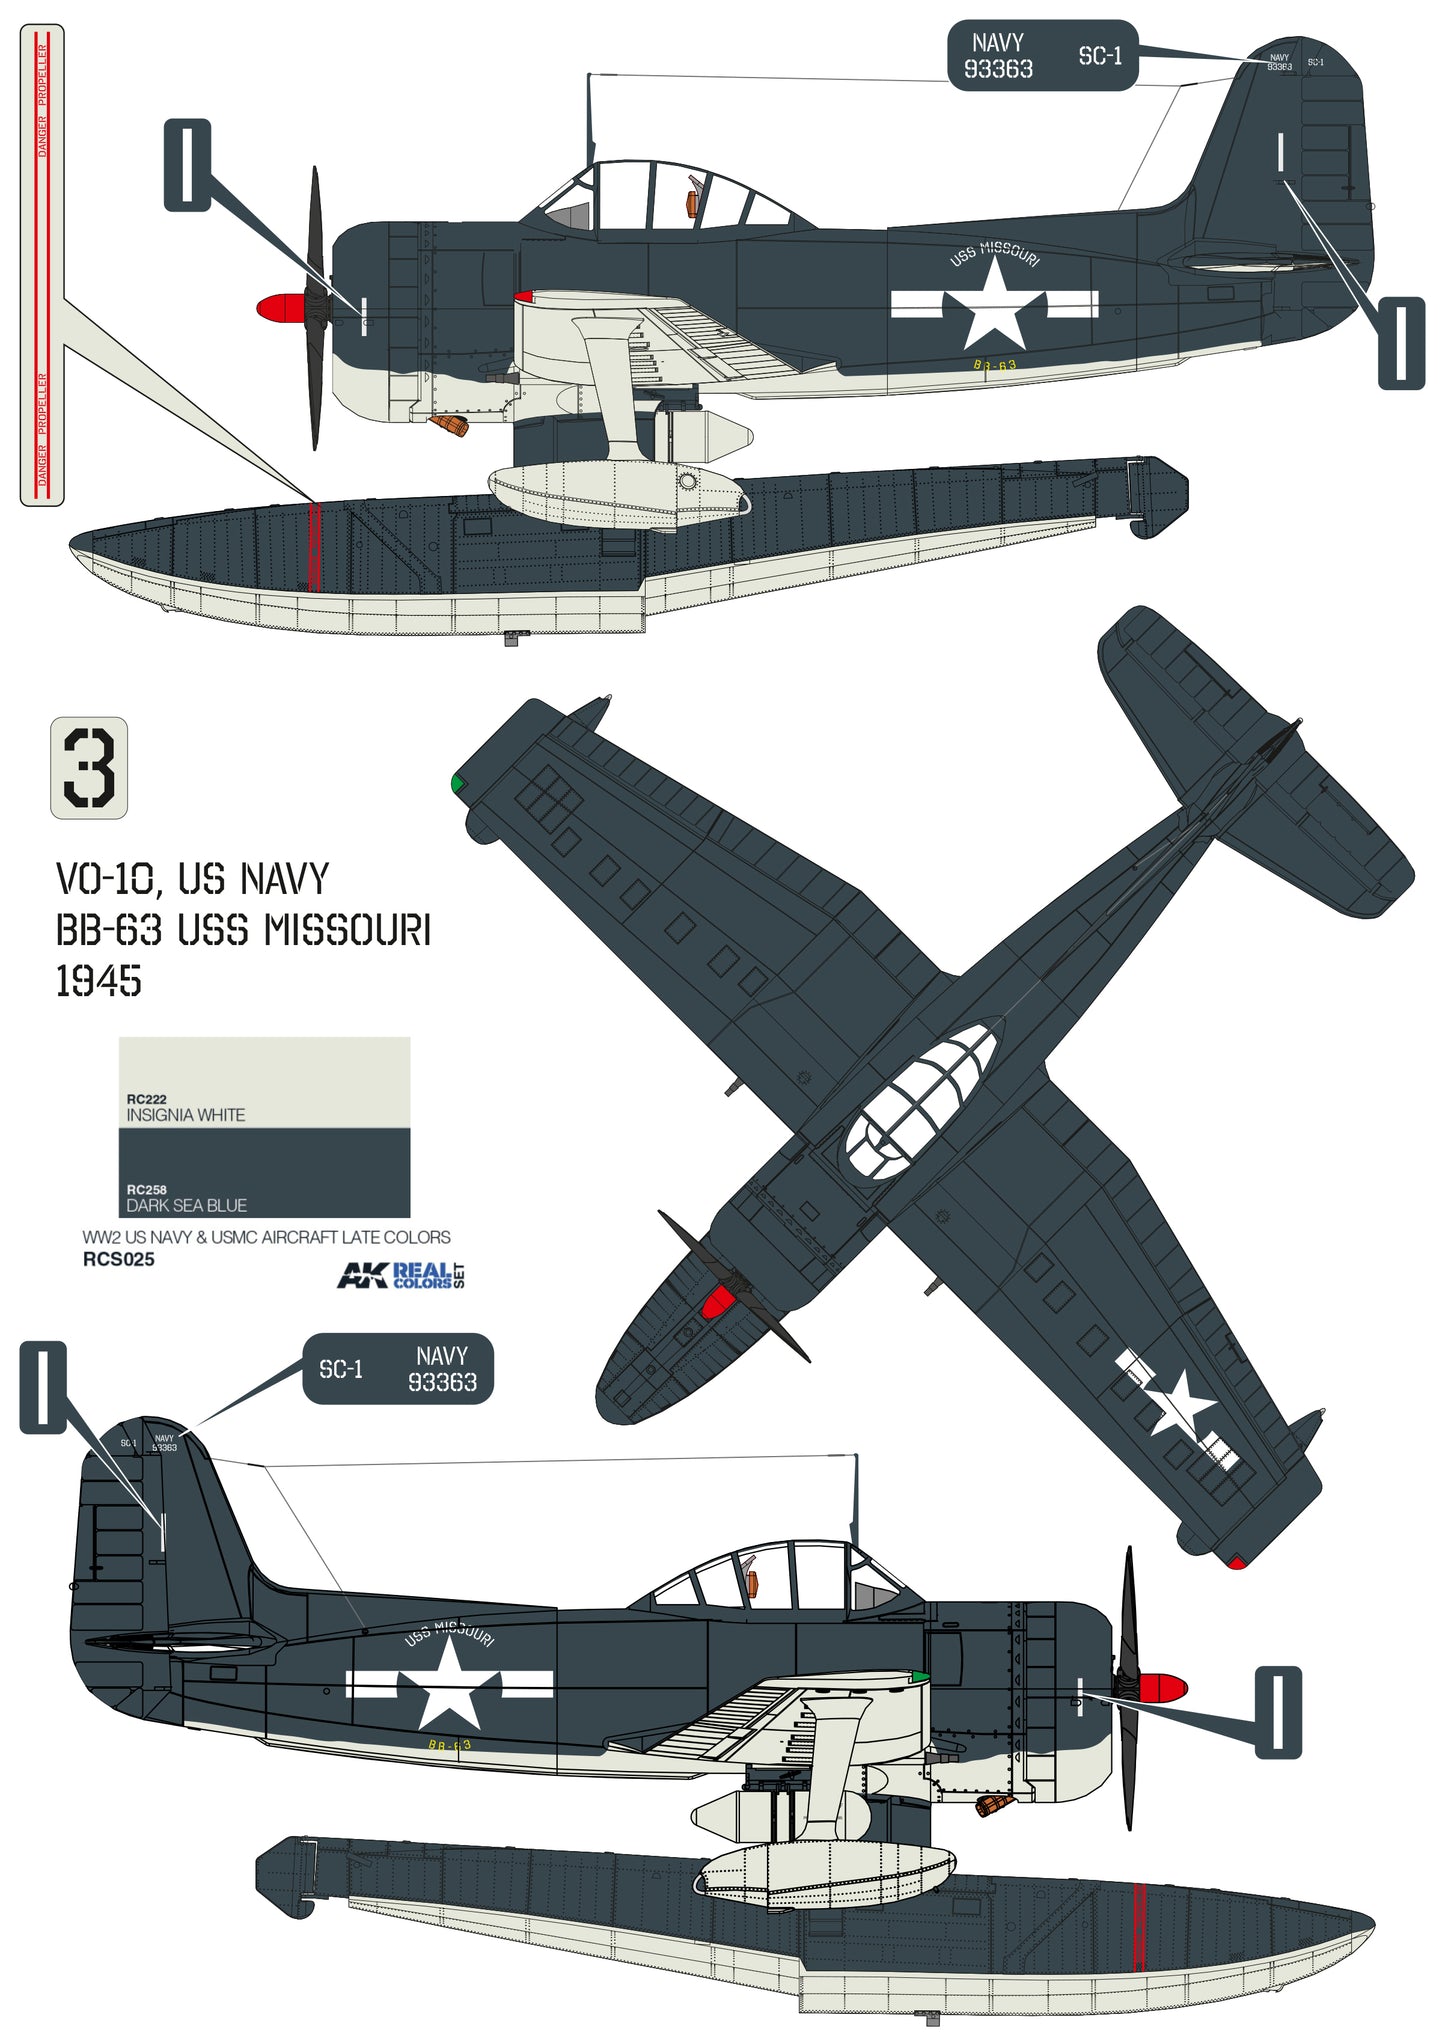 Curtiss SC-1 Seahawk 1/48 scale model kit